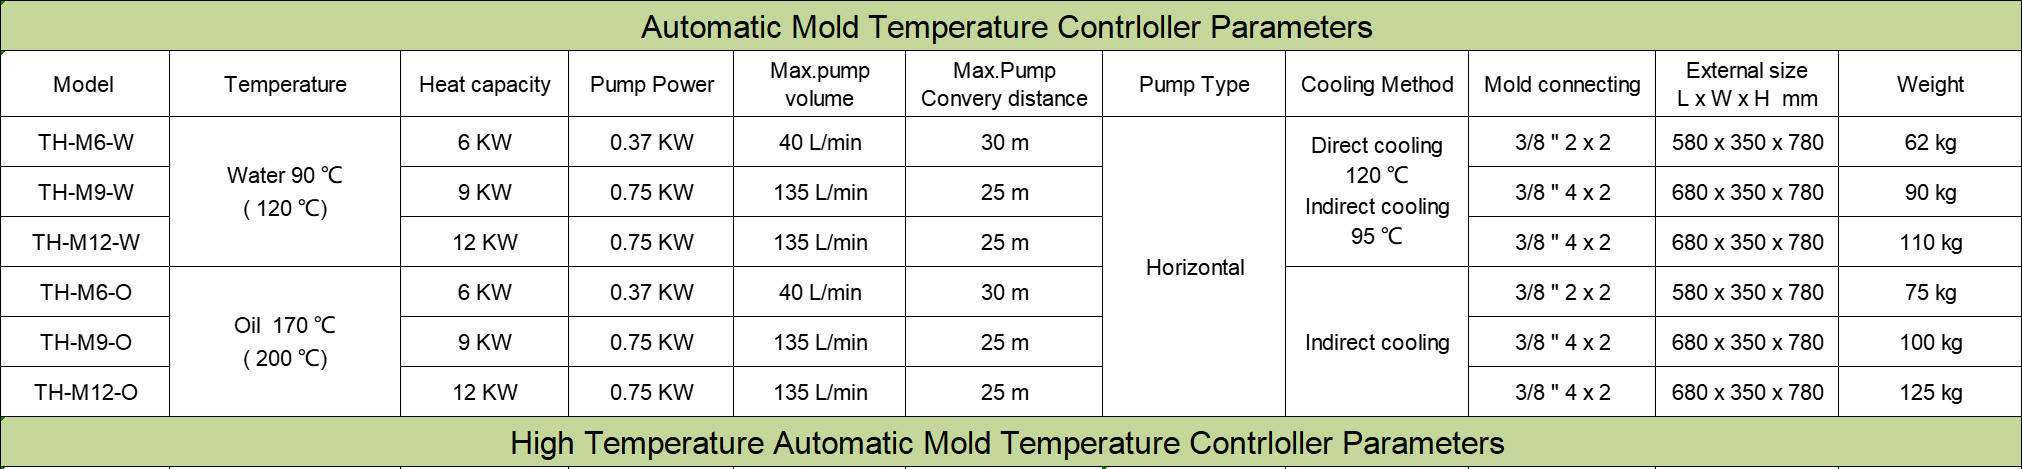 Automatic Mold Temperature Controller Parameters